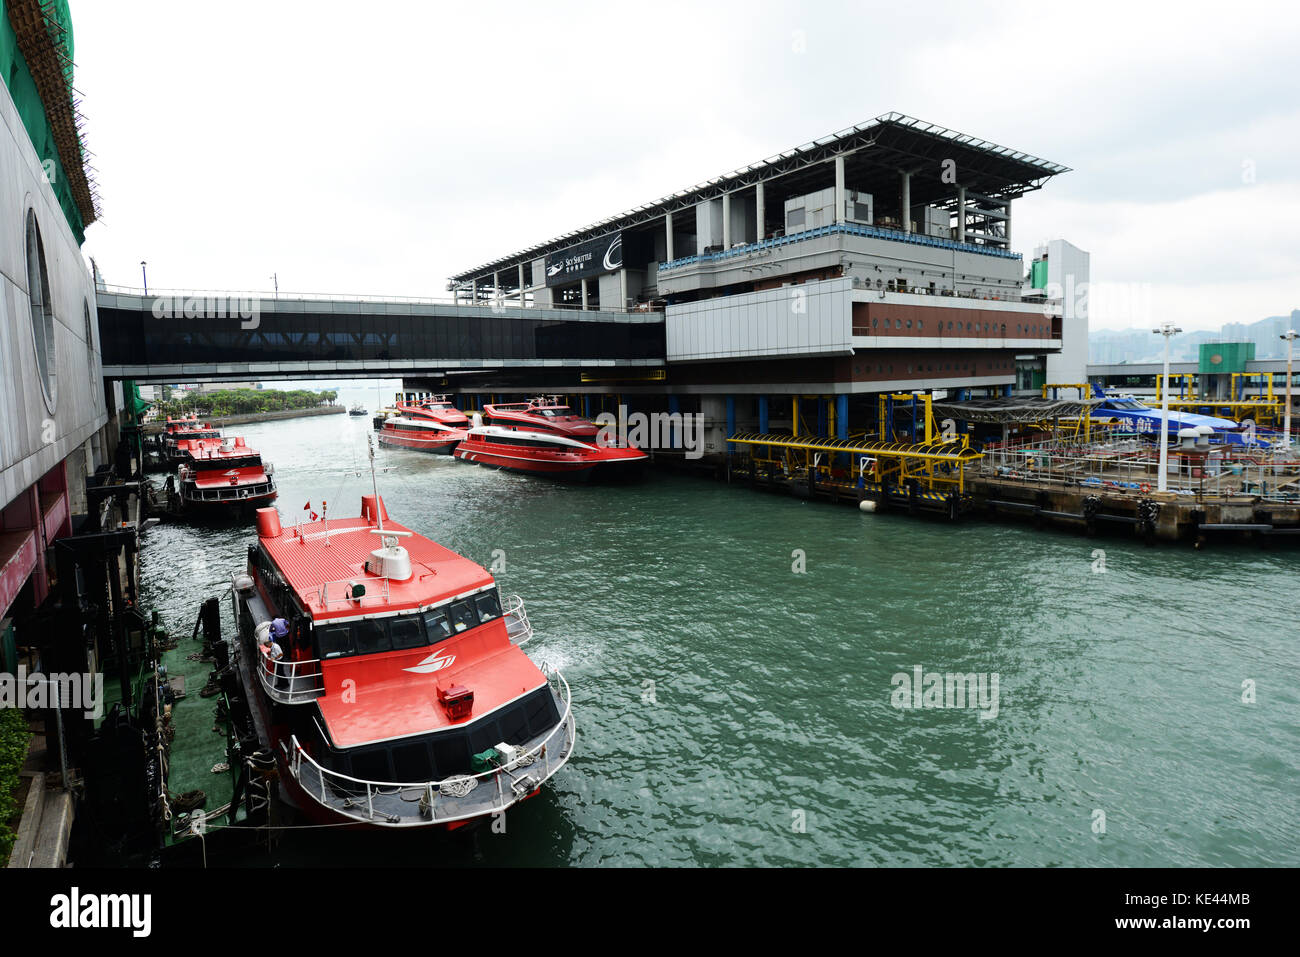 The Hong Kong - Macau Turbojet ferries docking at the station. Stock Photo